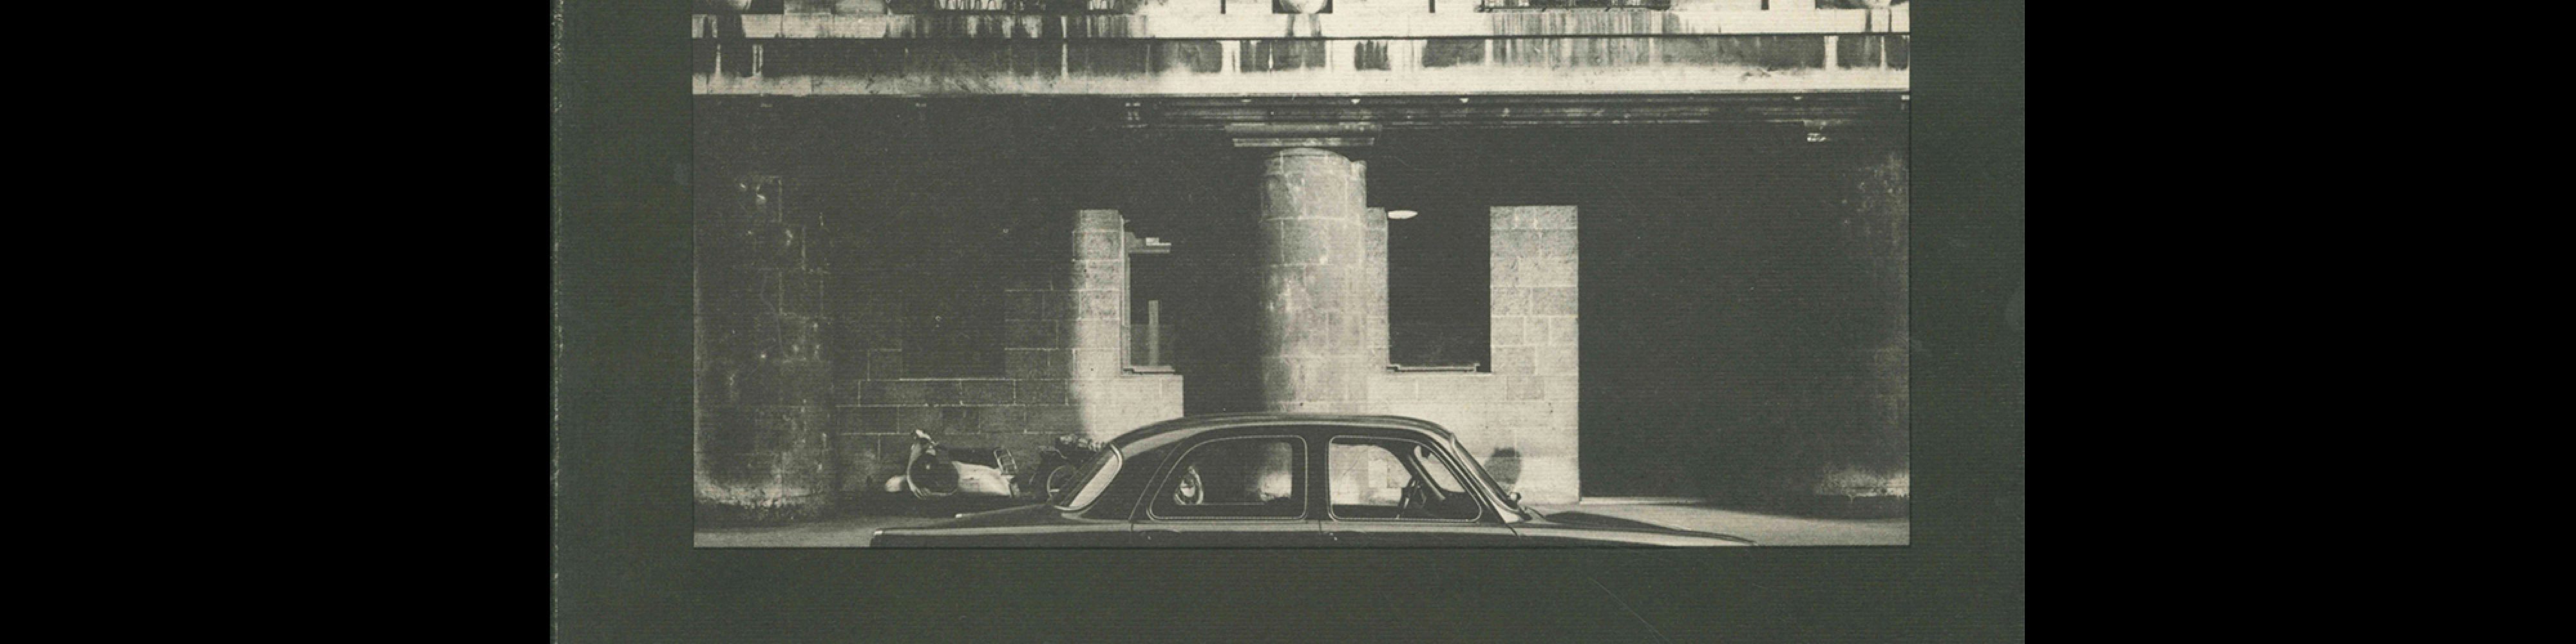 Rassegna 20, Fotografie Di Architettura / Photographs of Architecture, 1984